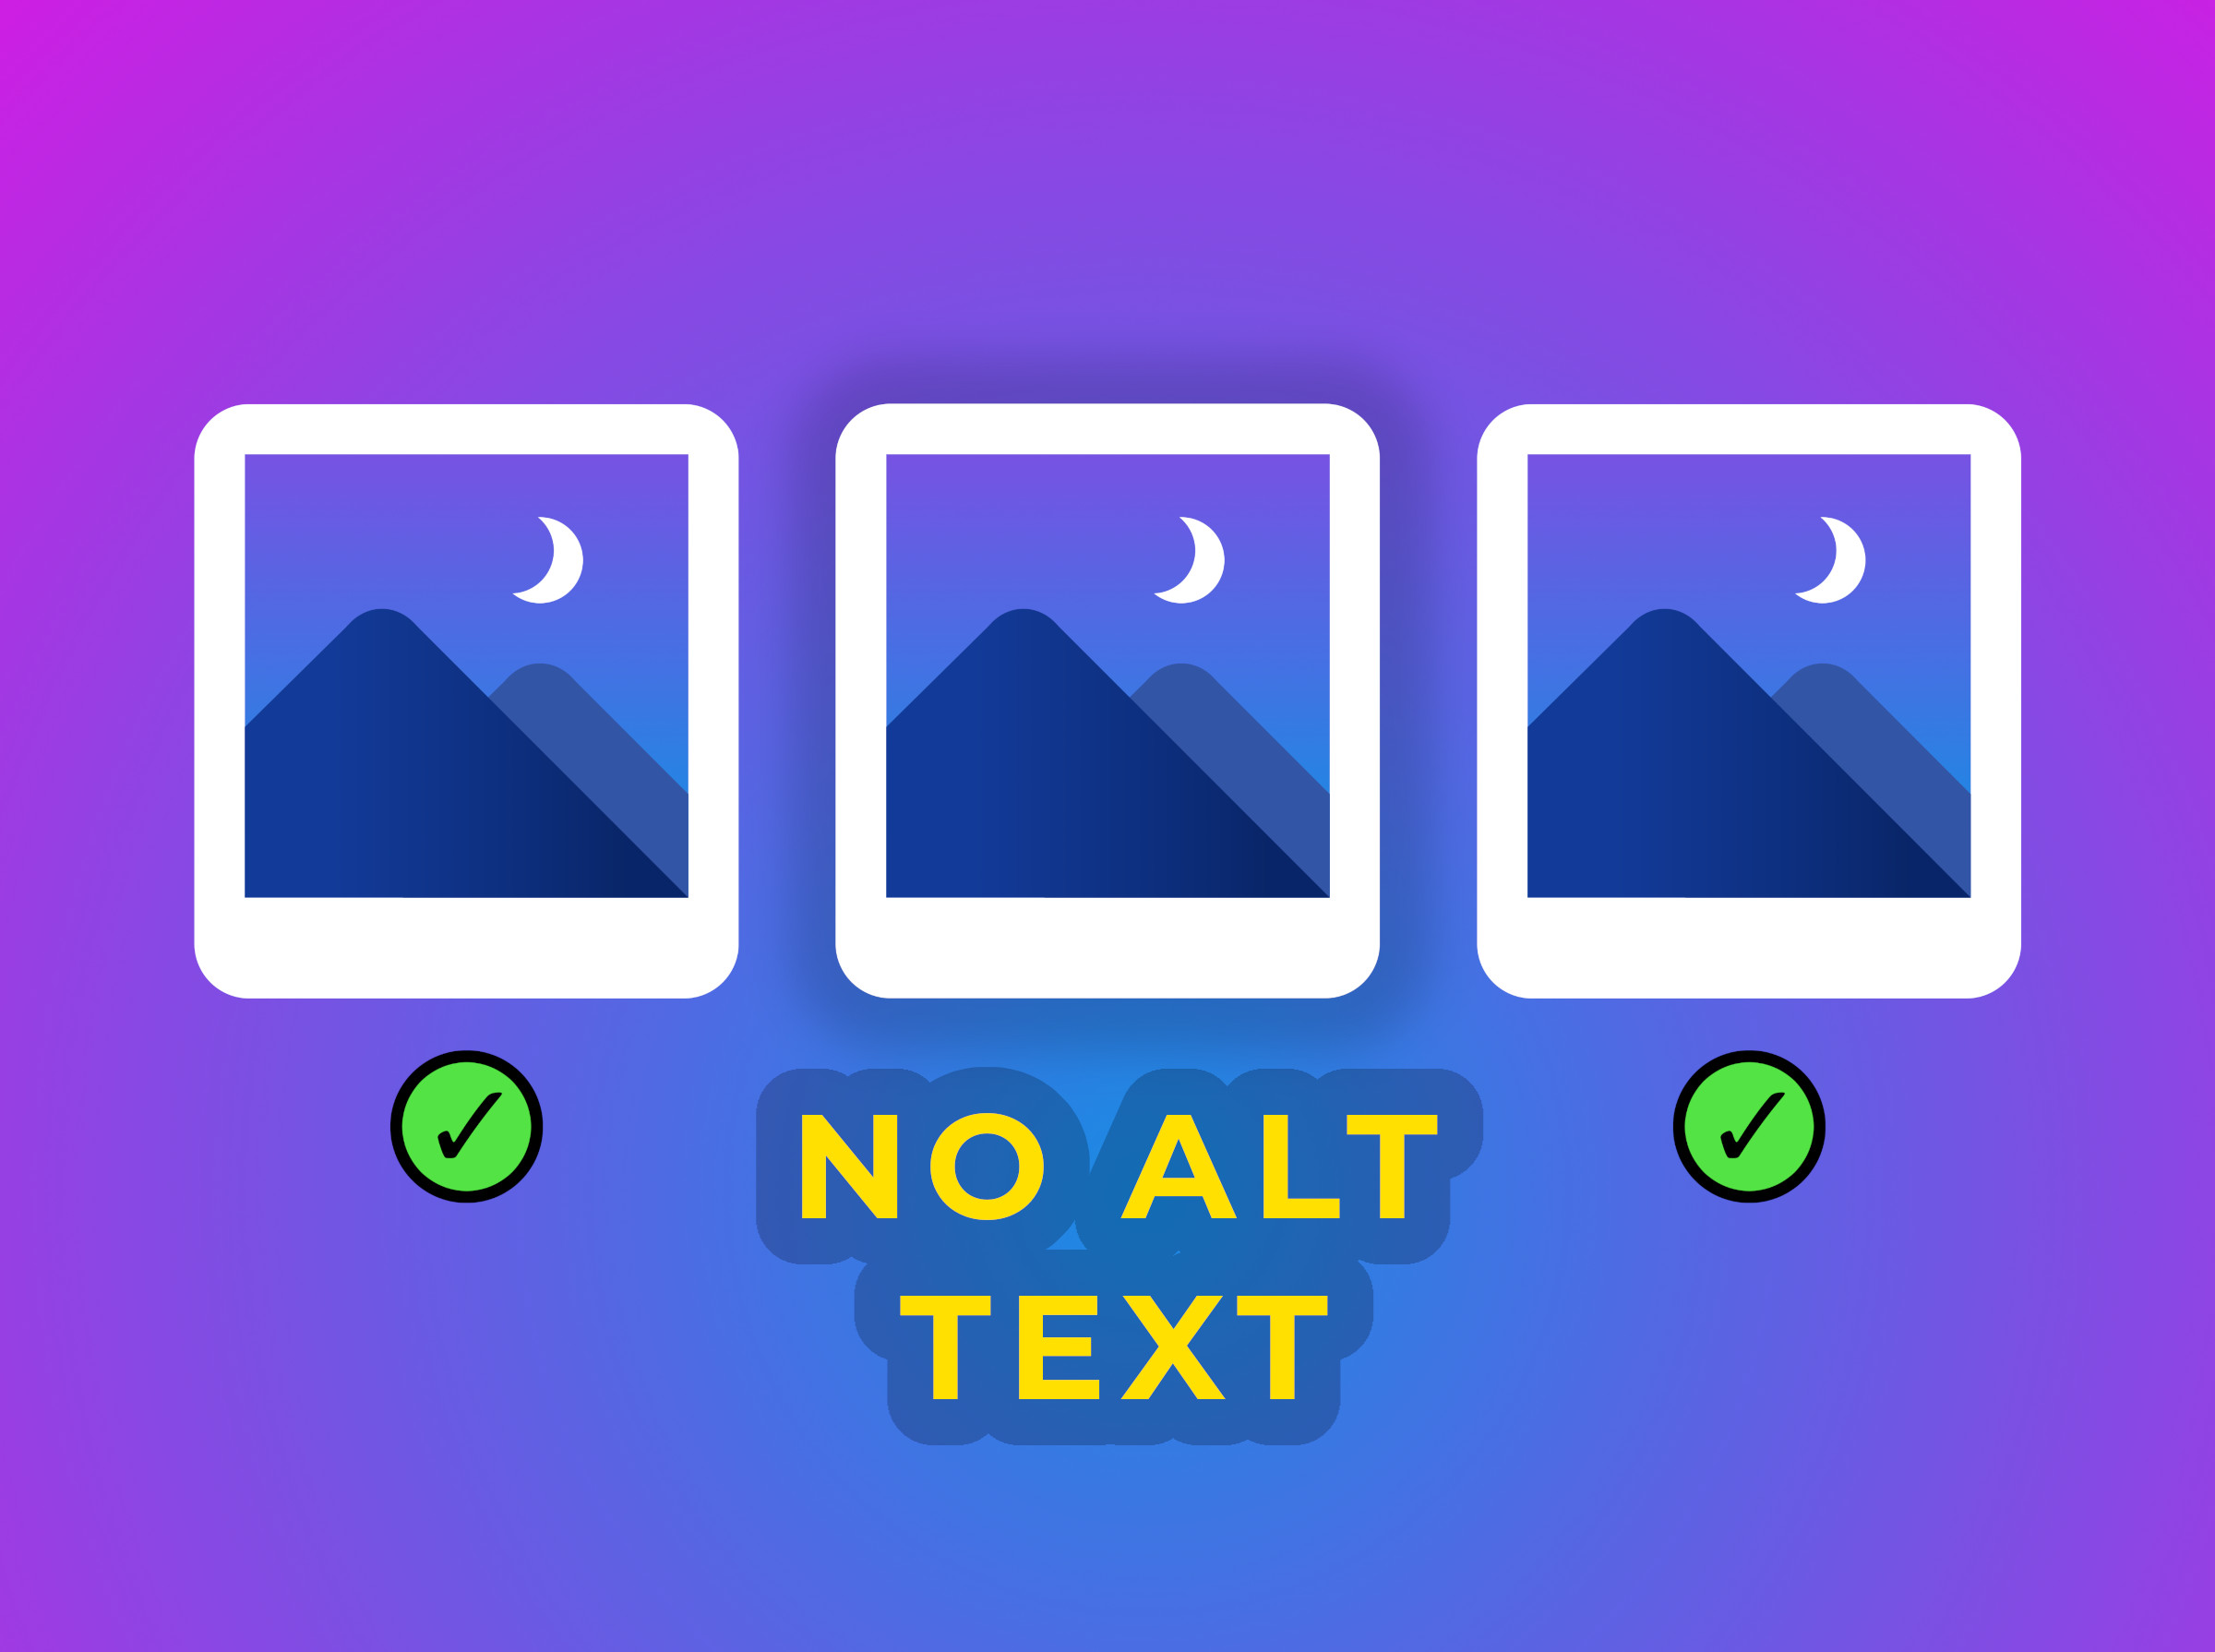 Filter missing alt text tutorial for WordPress